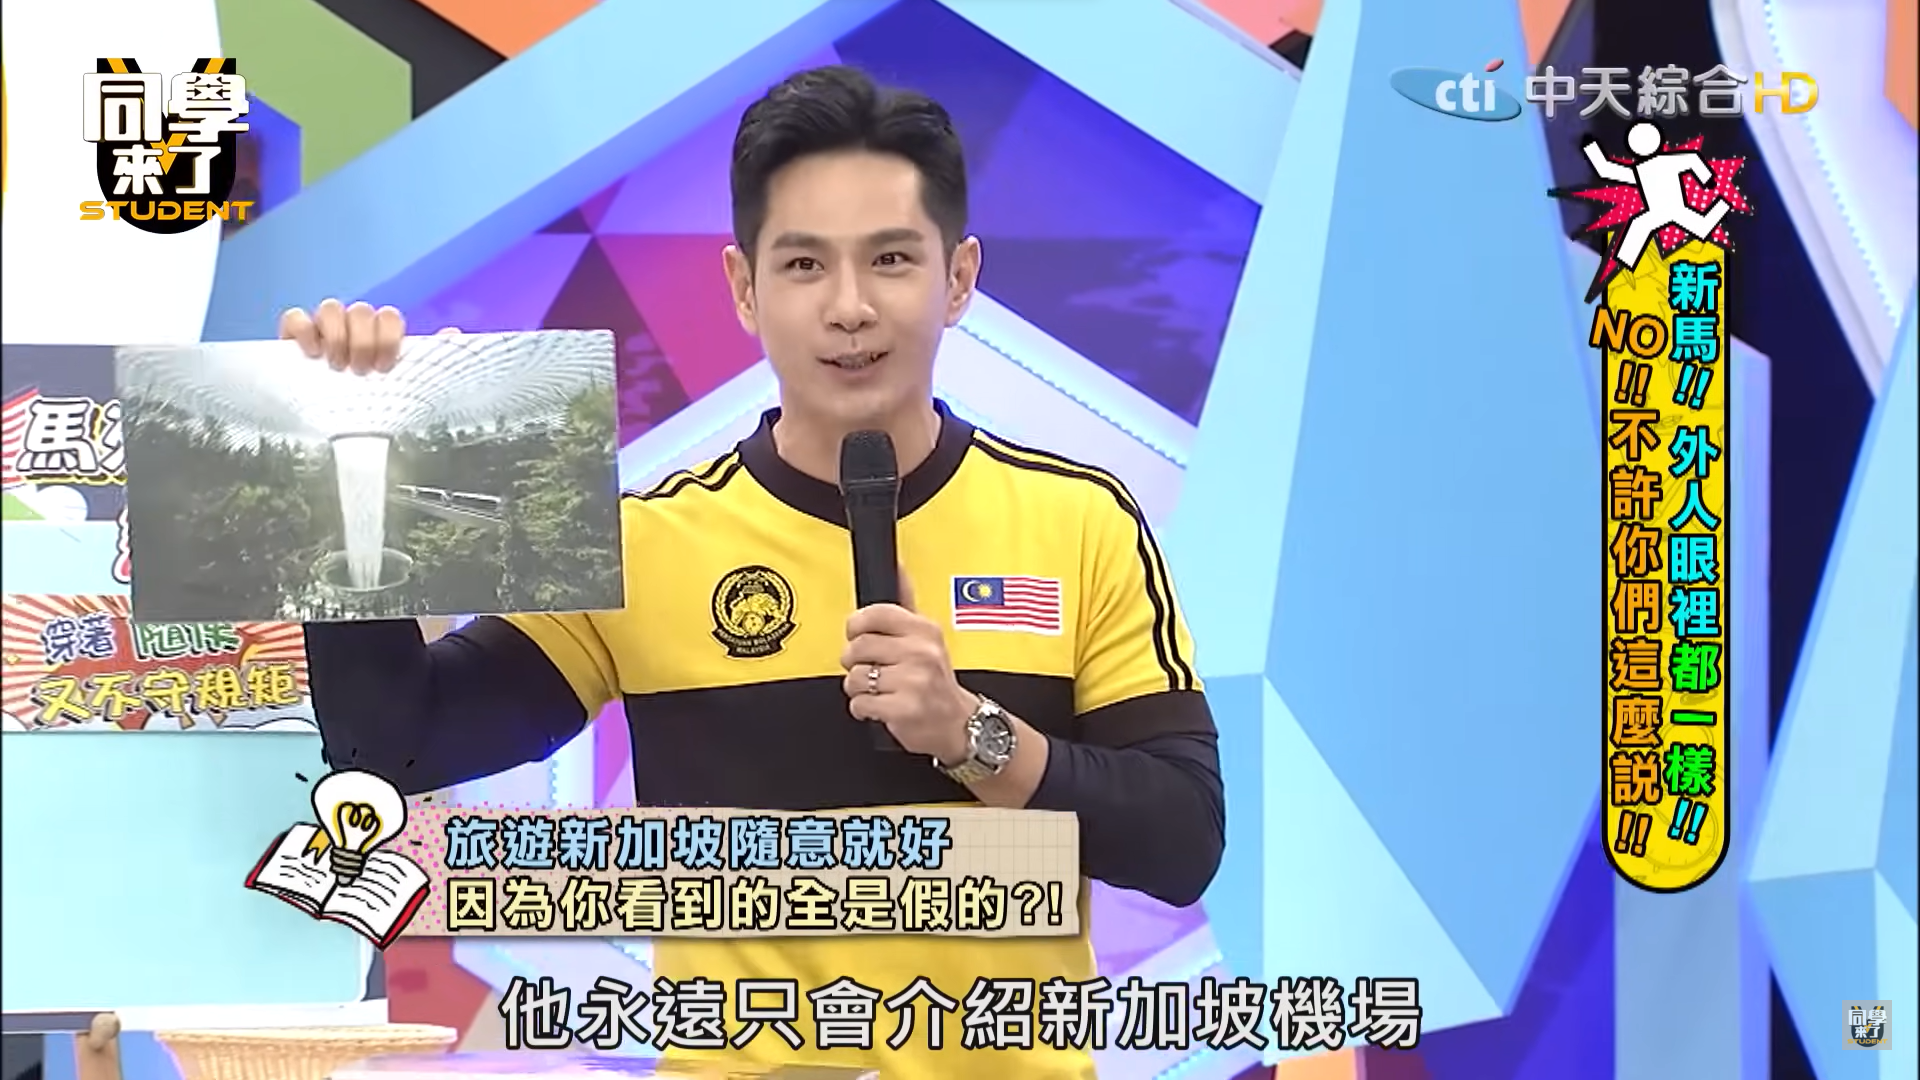 M'sian contestant zu xiong calls sg's jewel changi airport waterfall as 'man-made'